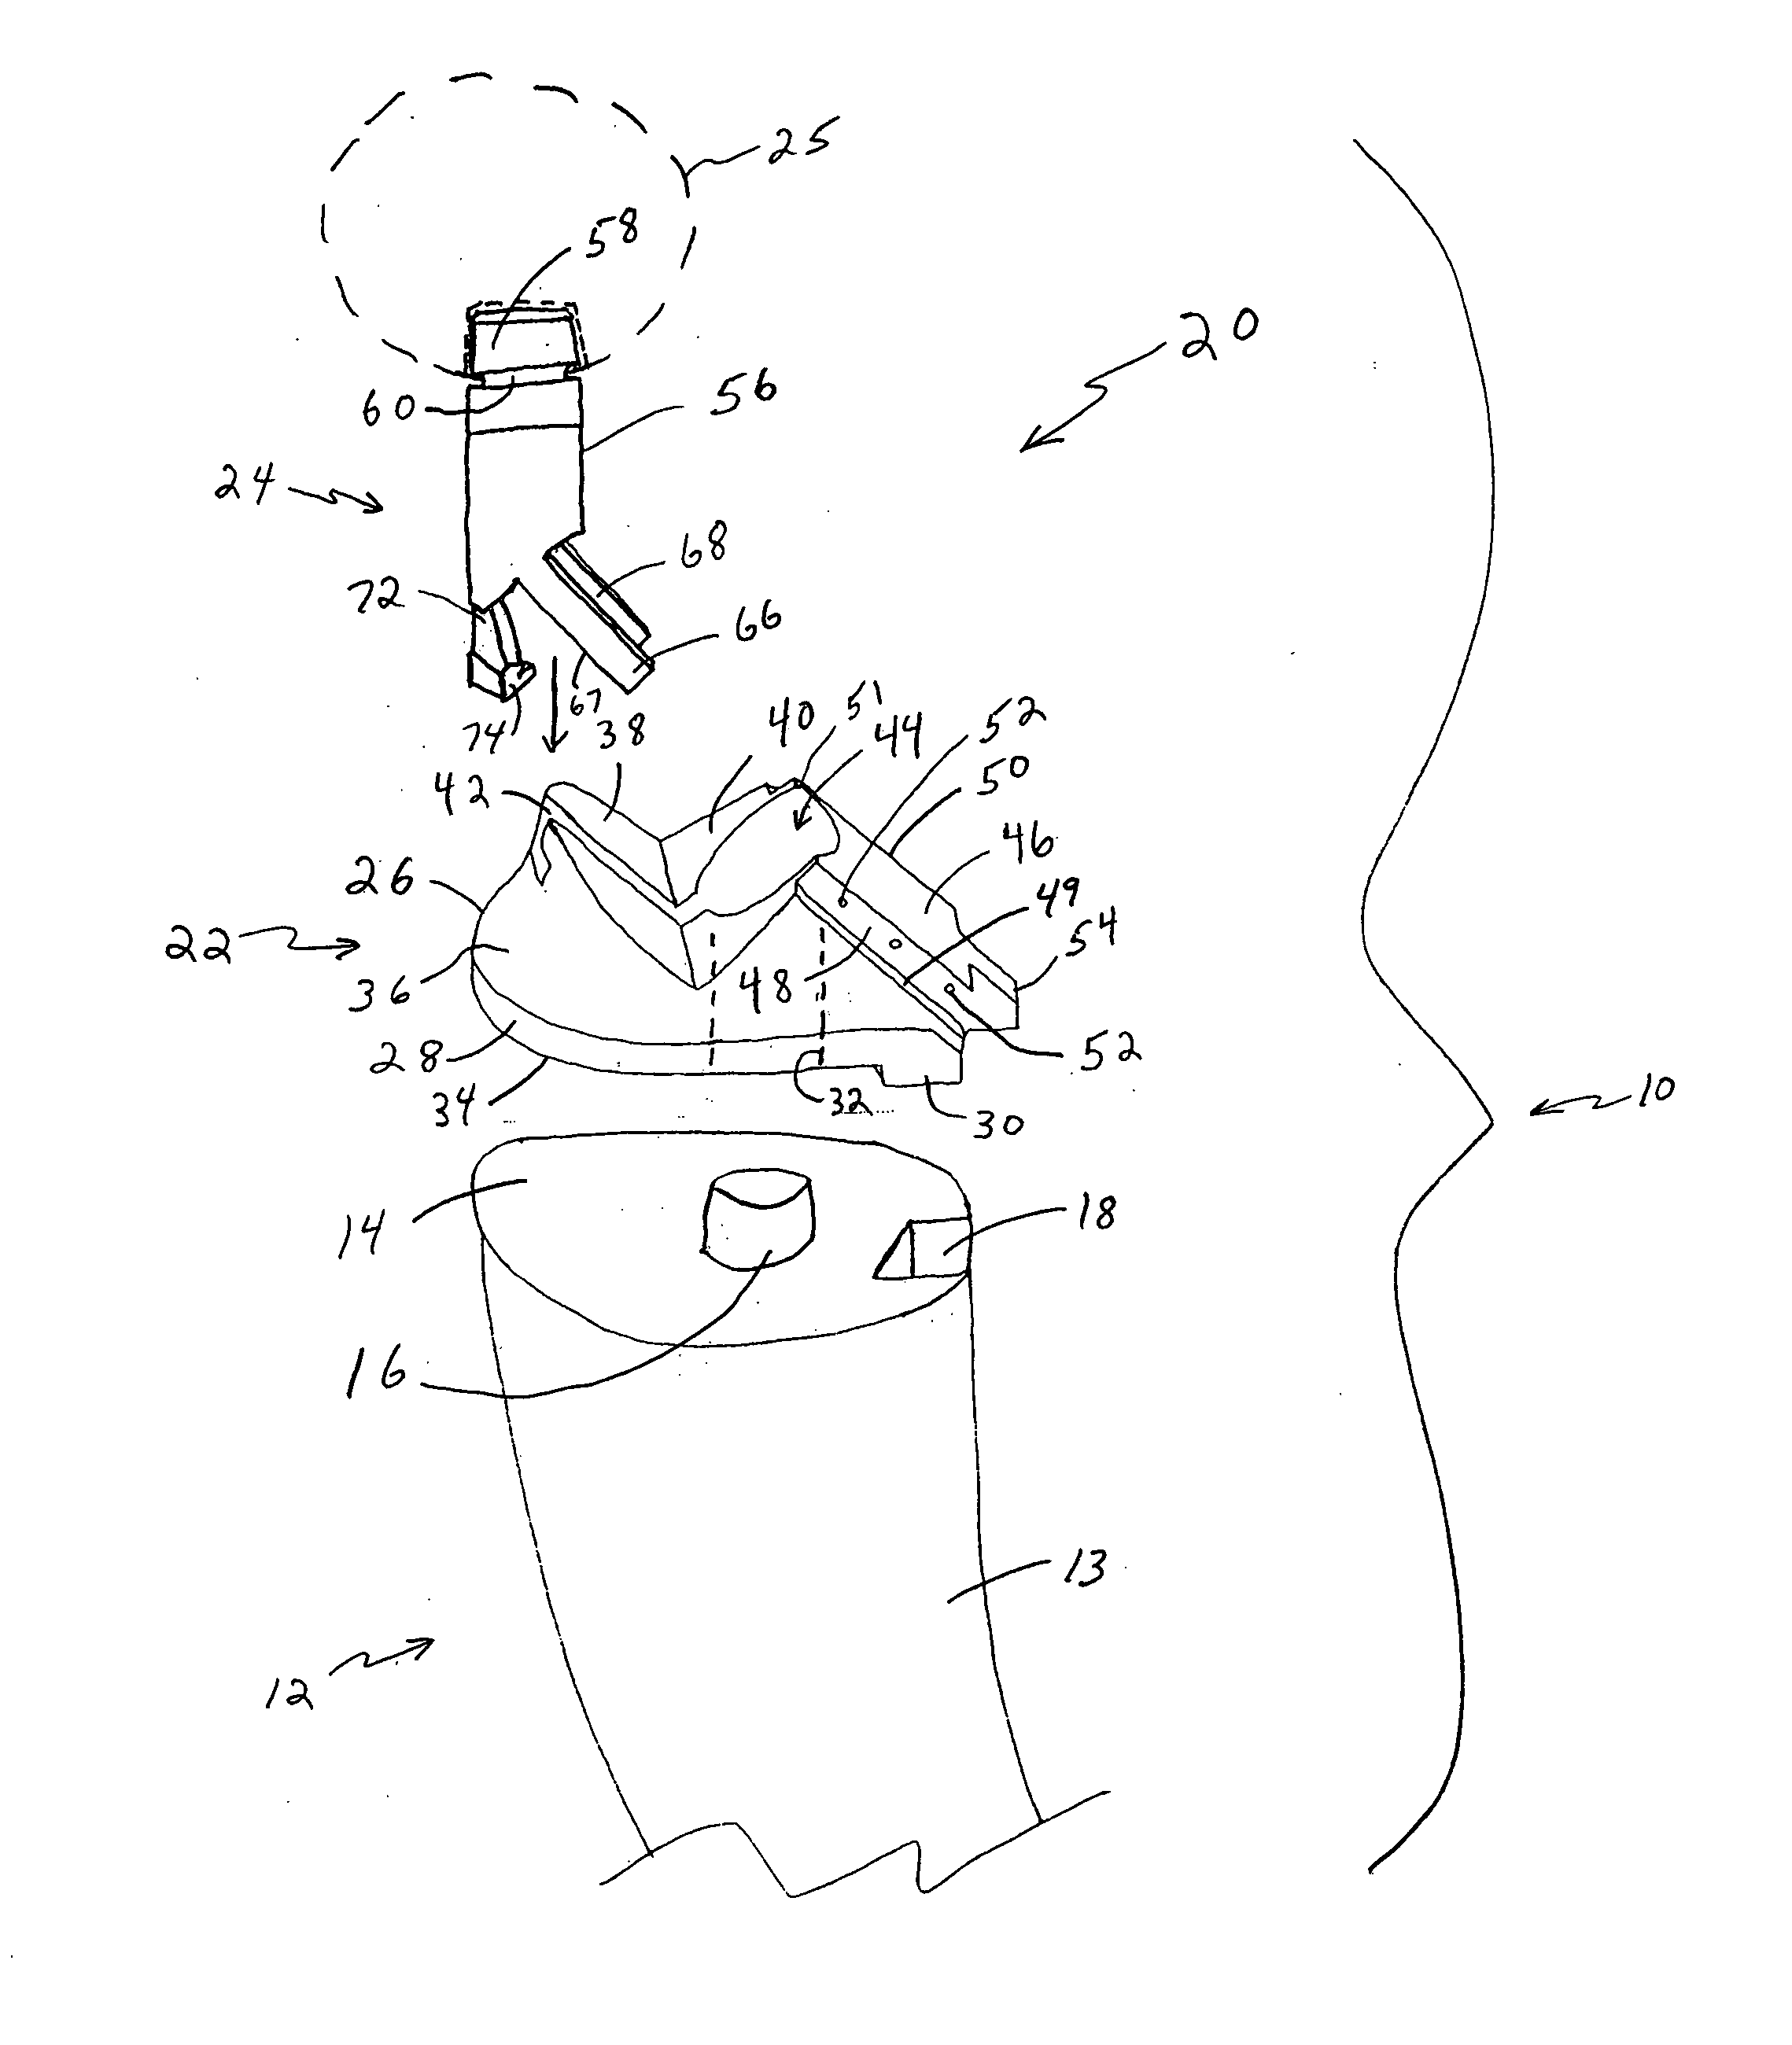 Modular trial neck segment